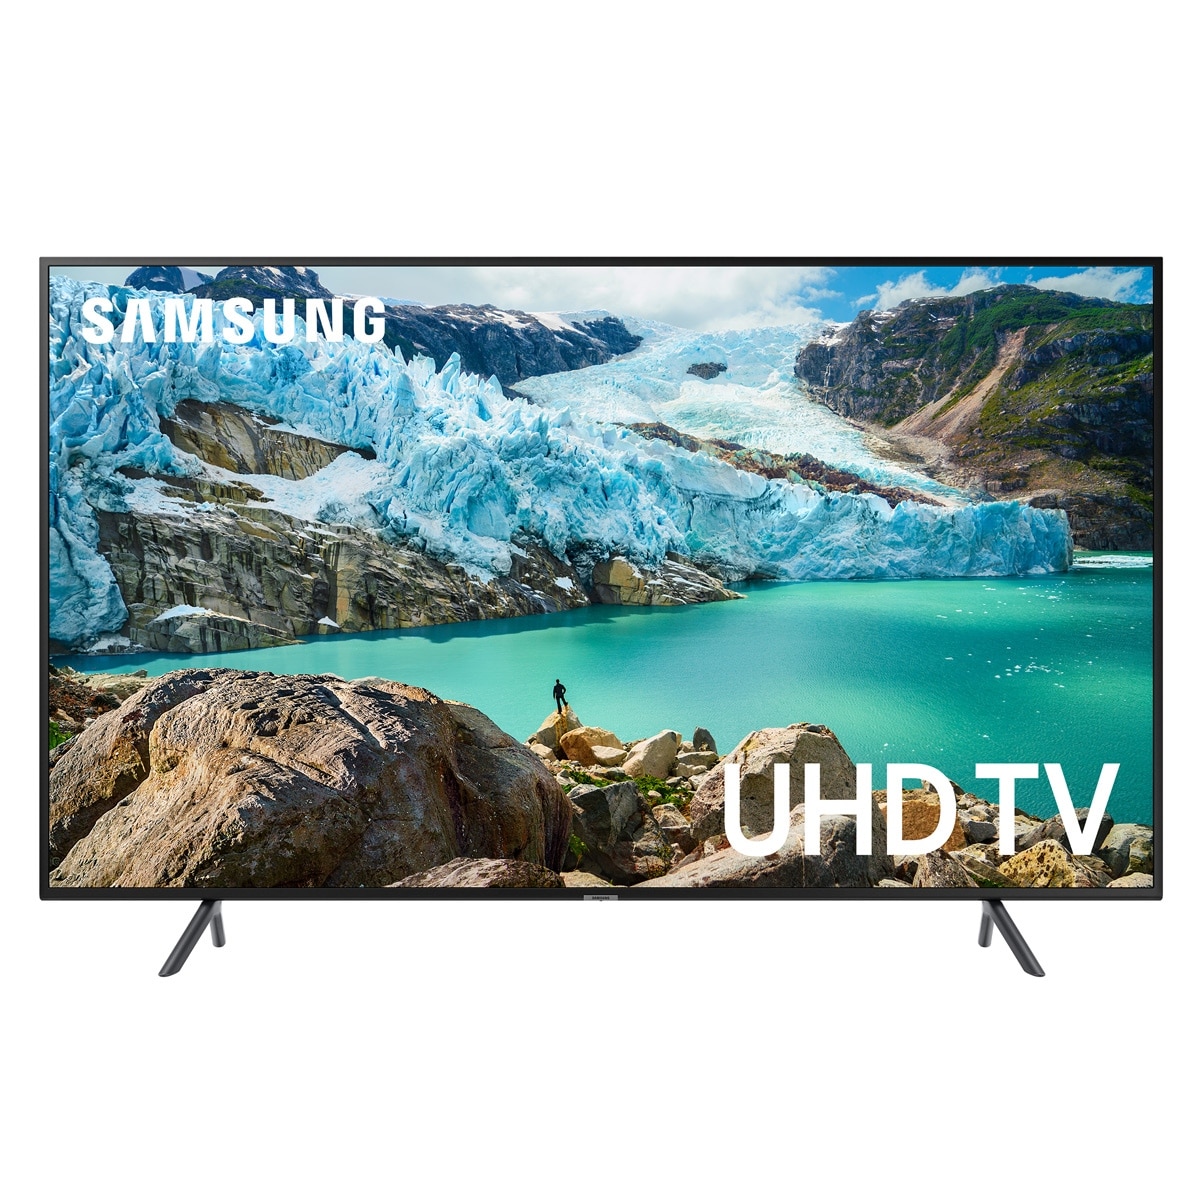 Samsung UN65RU7100 65" 4K UHD Smart TV